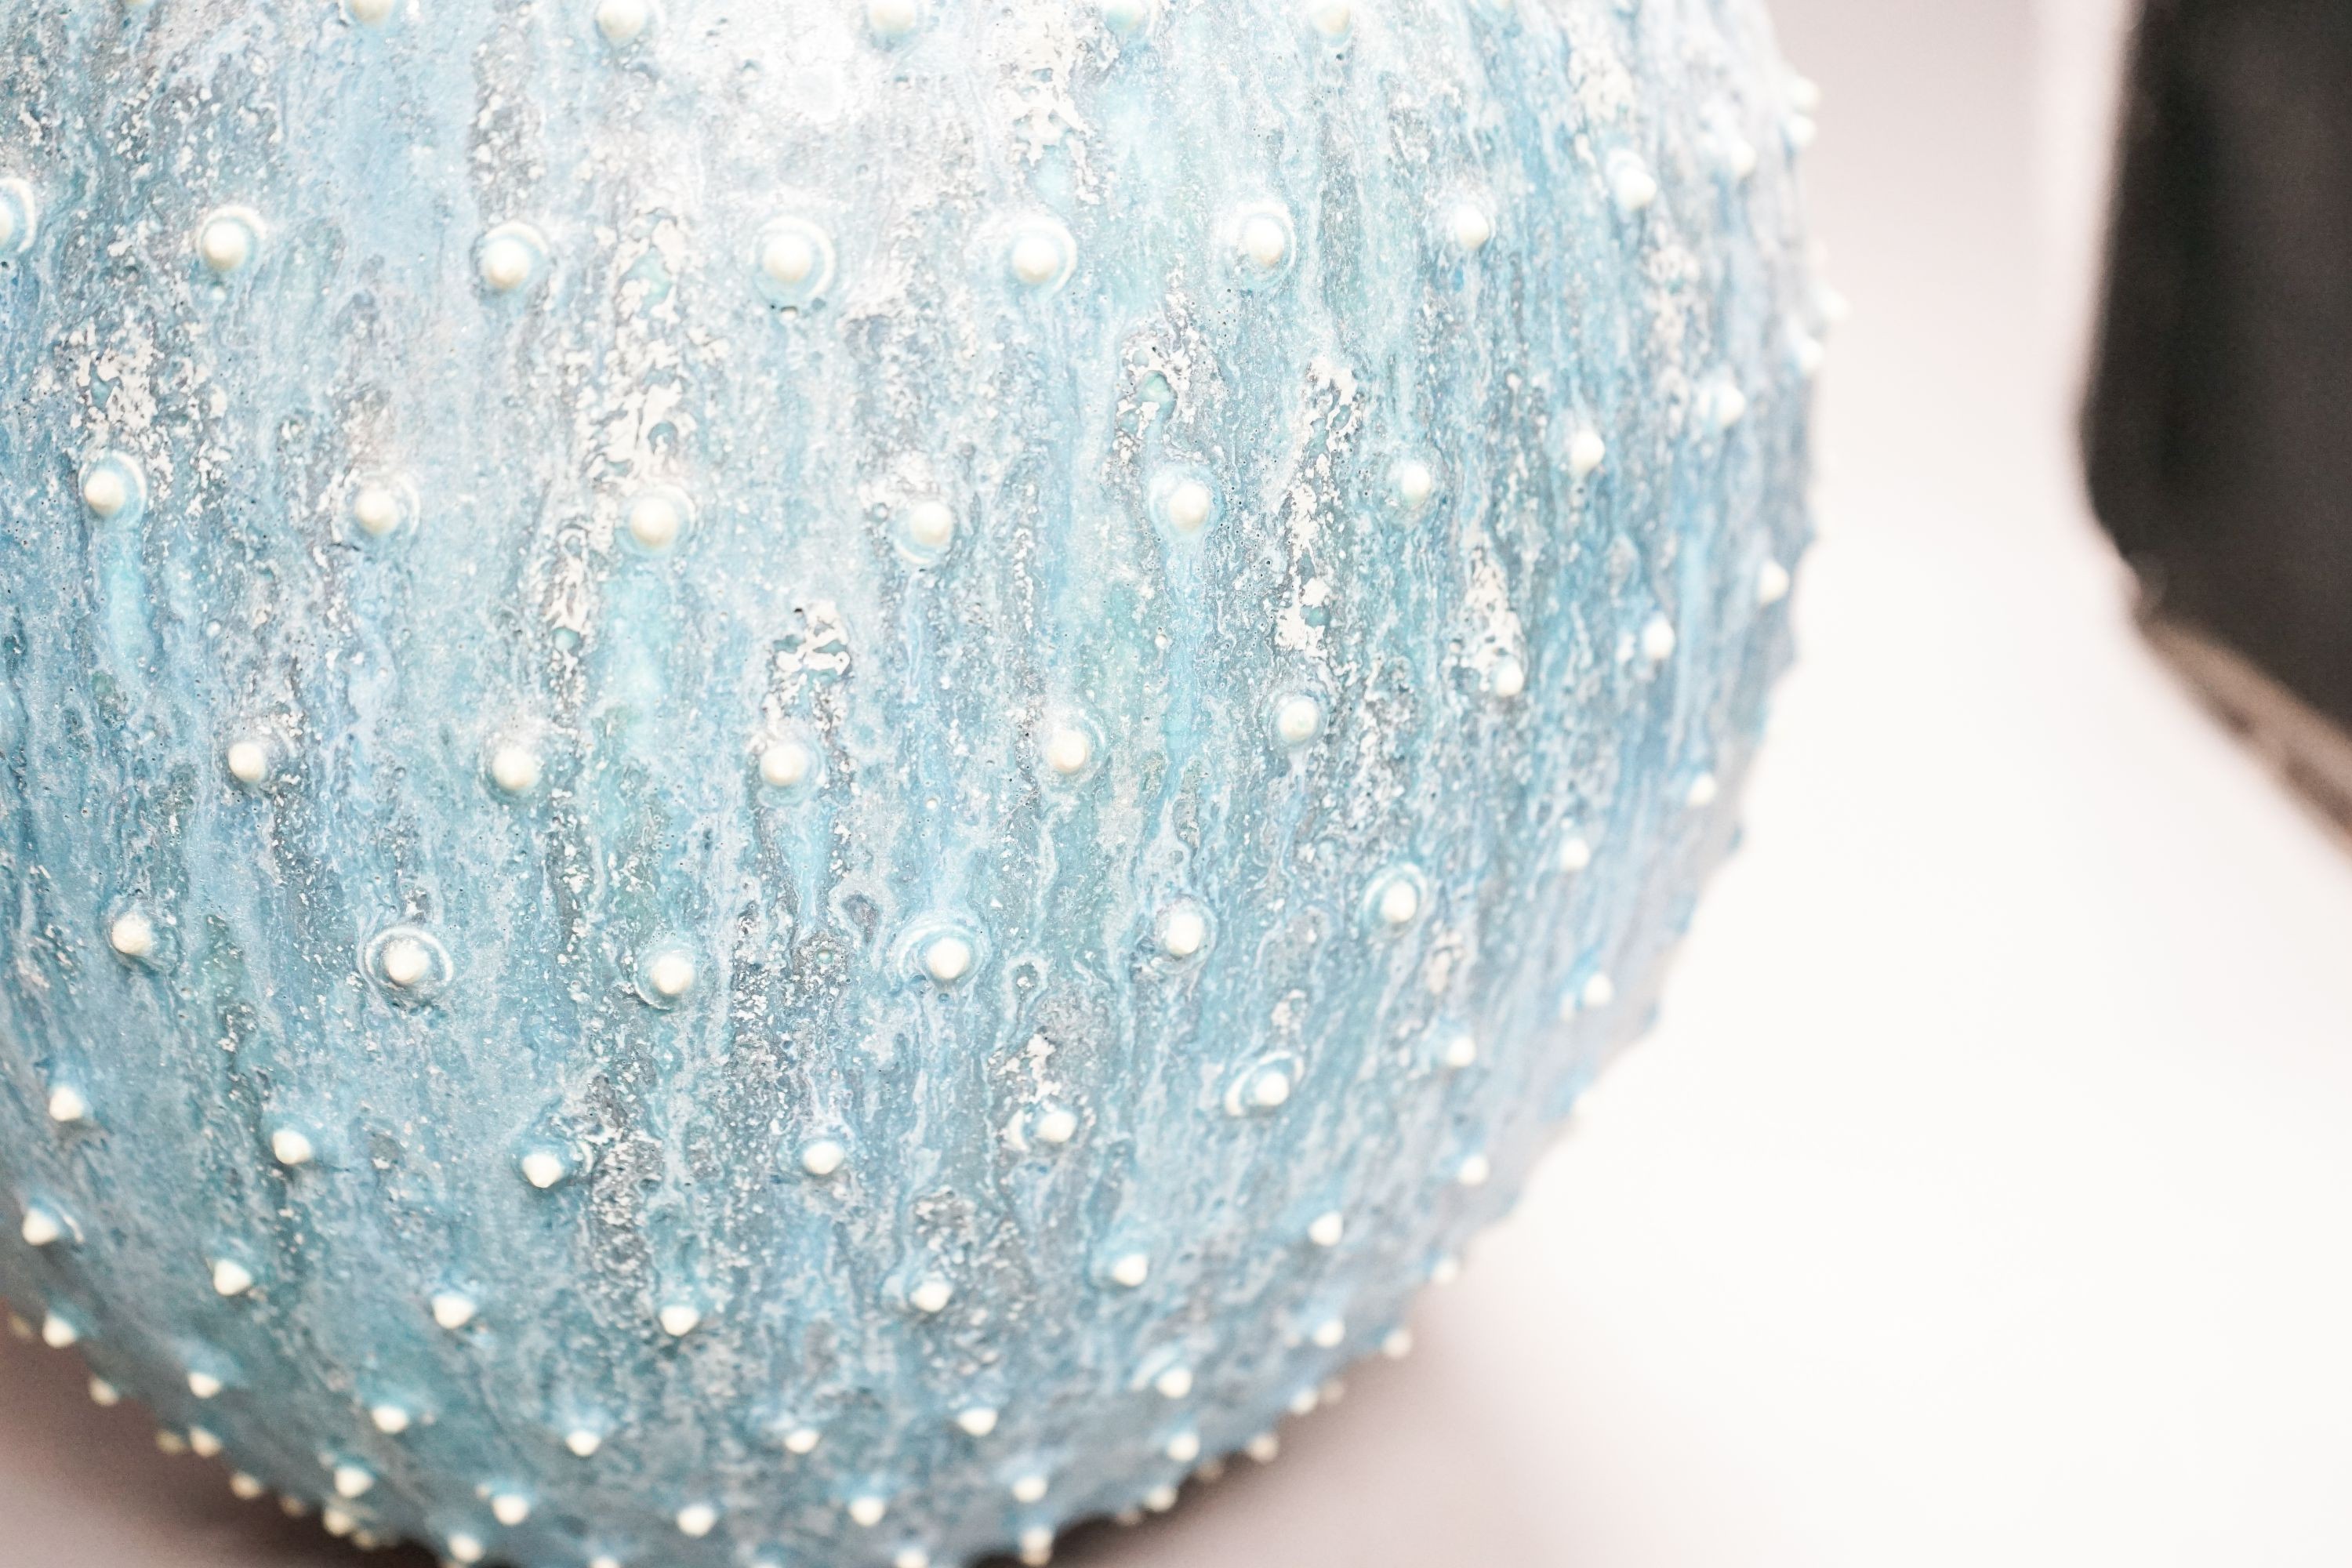 Peter Beard (b.1951) a large turquoise glazed stoneware 'urchin' globe jar and cover, 35cm